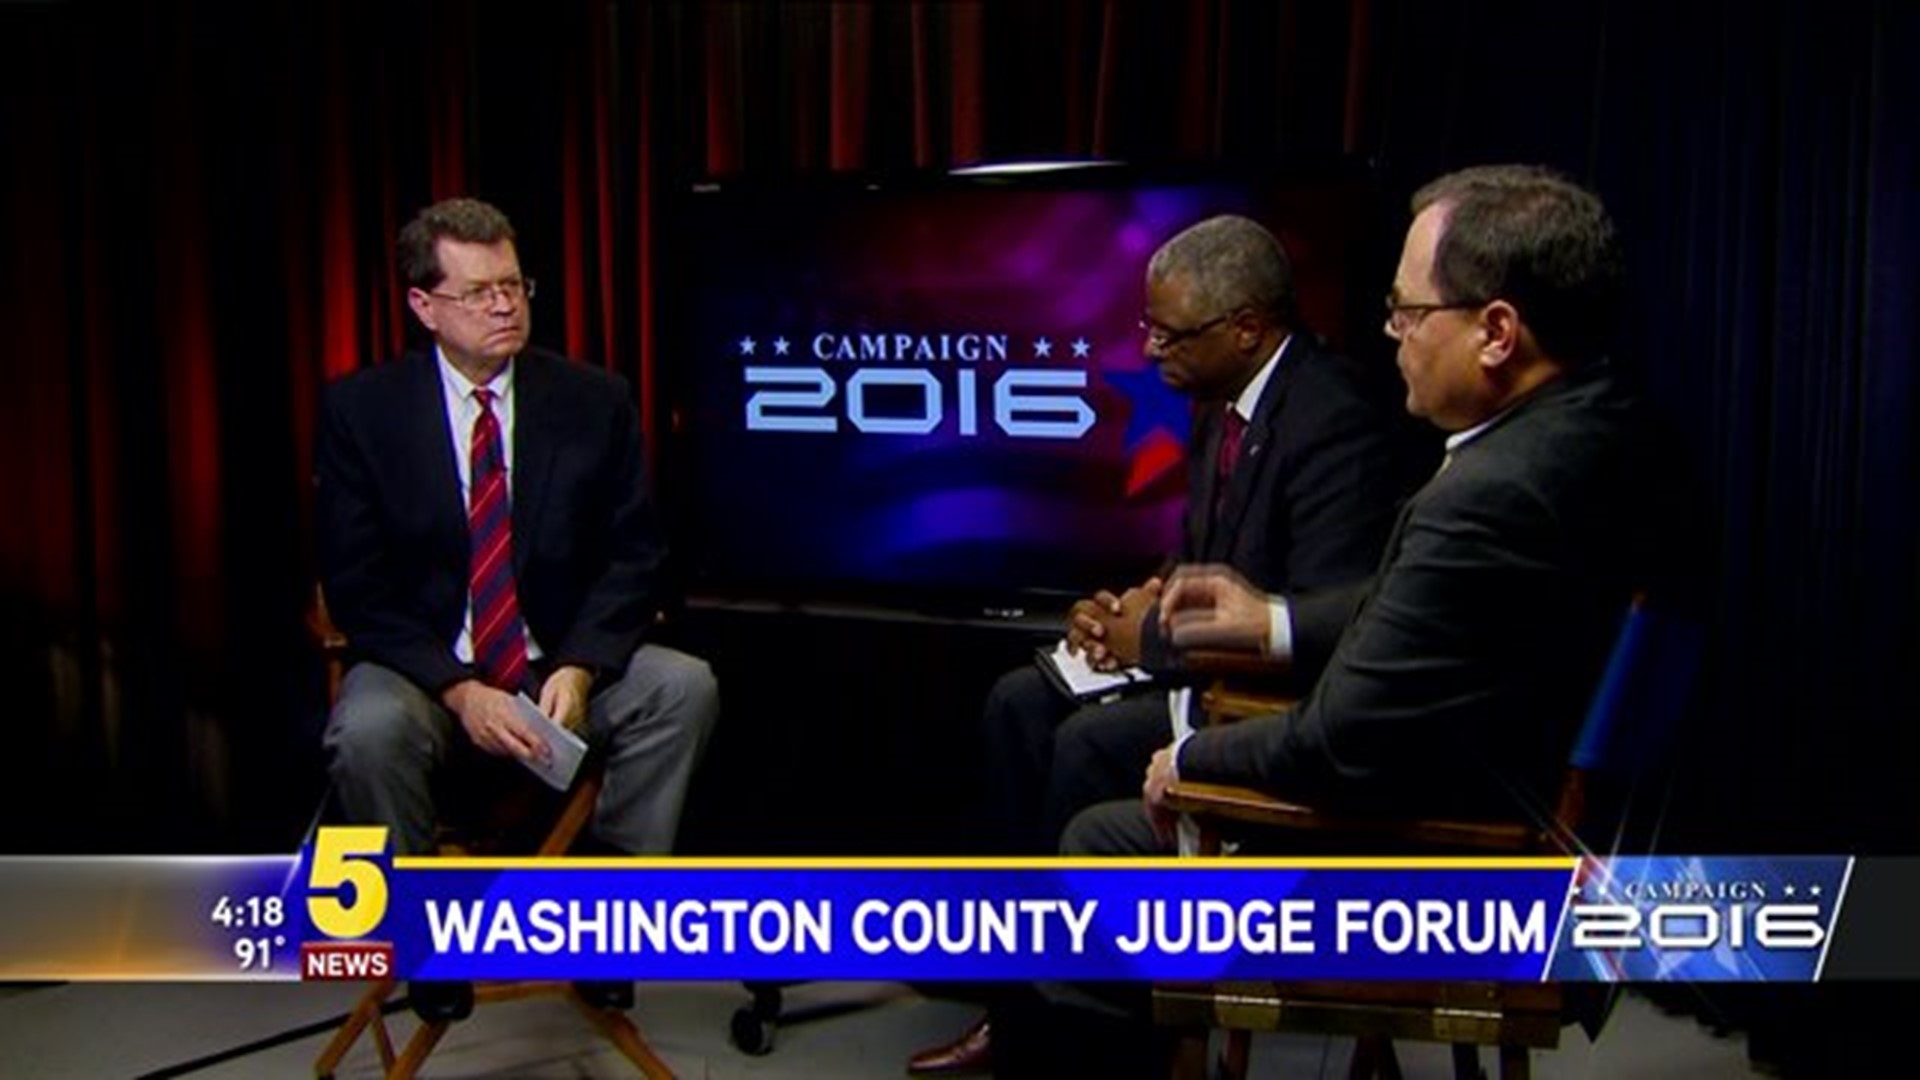 Washington County Judge Forum 2